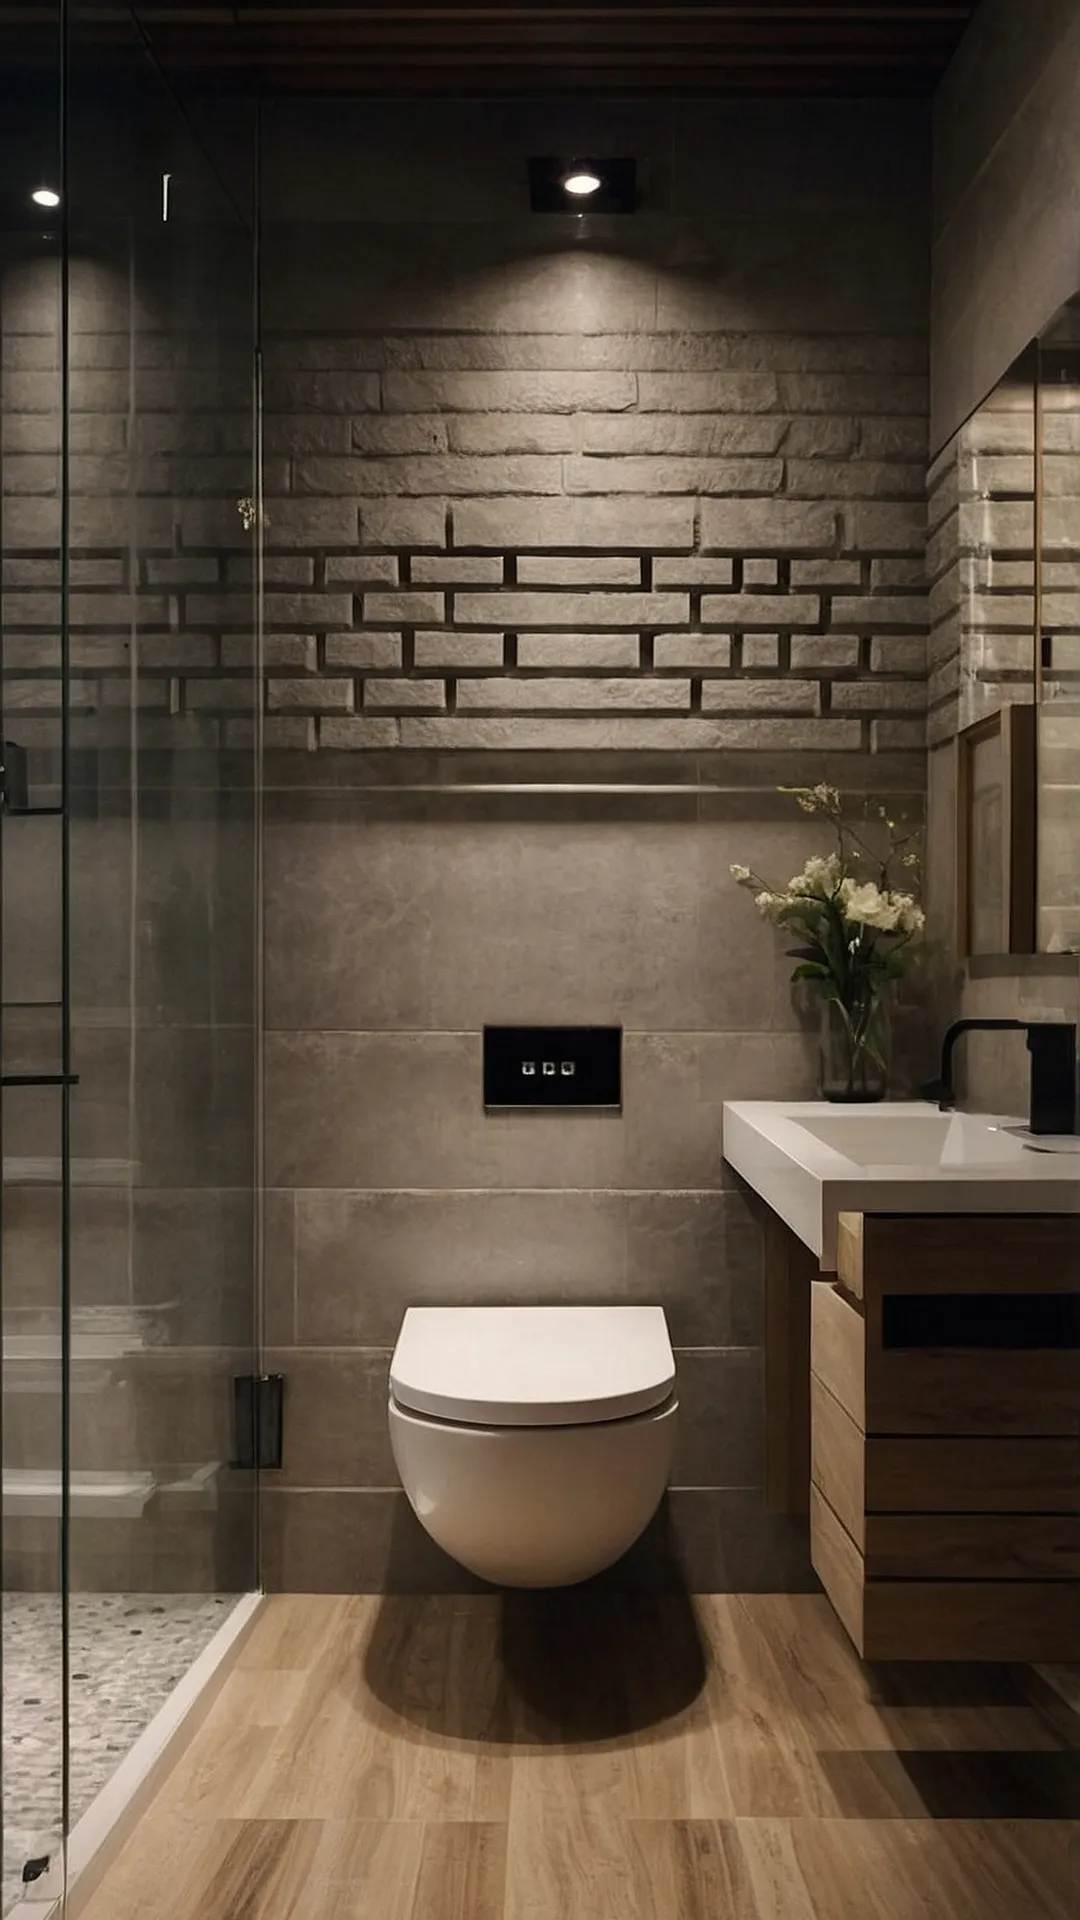 Smart and Small: Space-Saving Bathroom Ideas